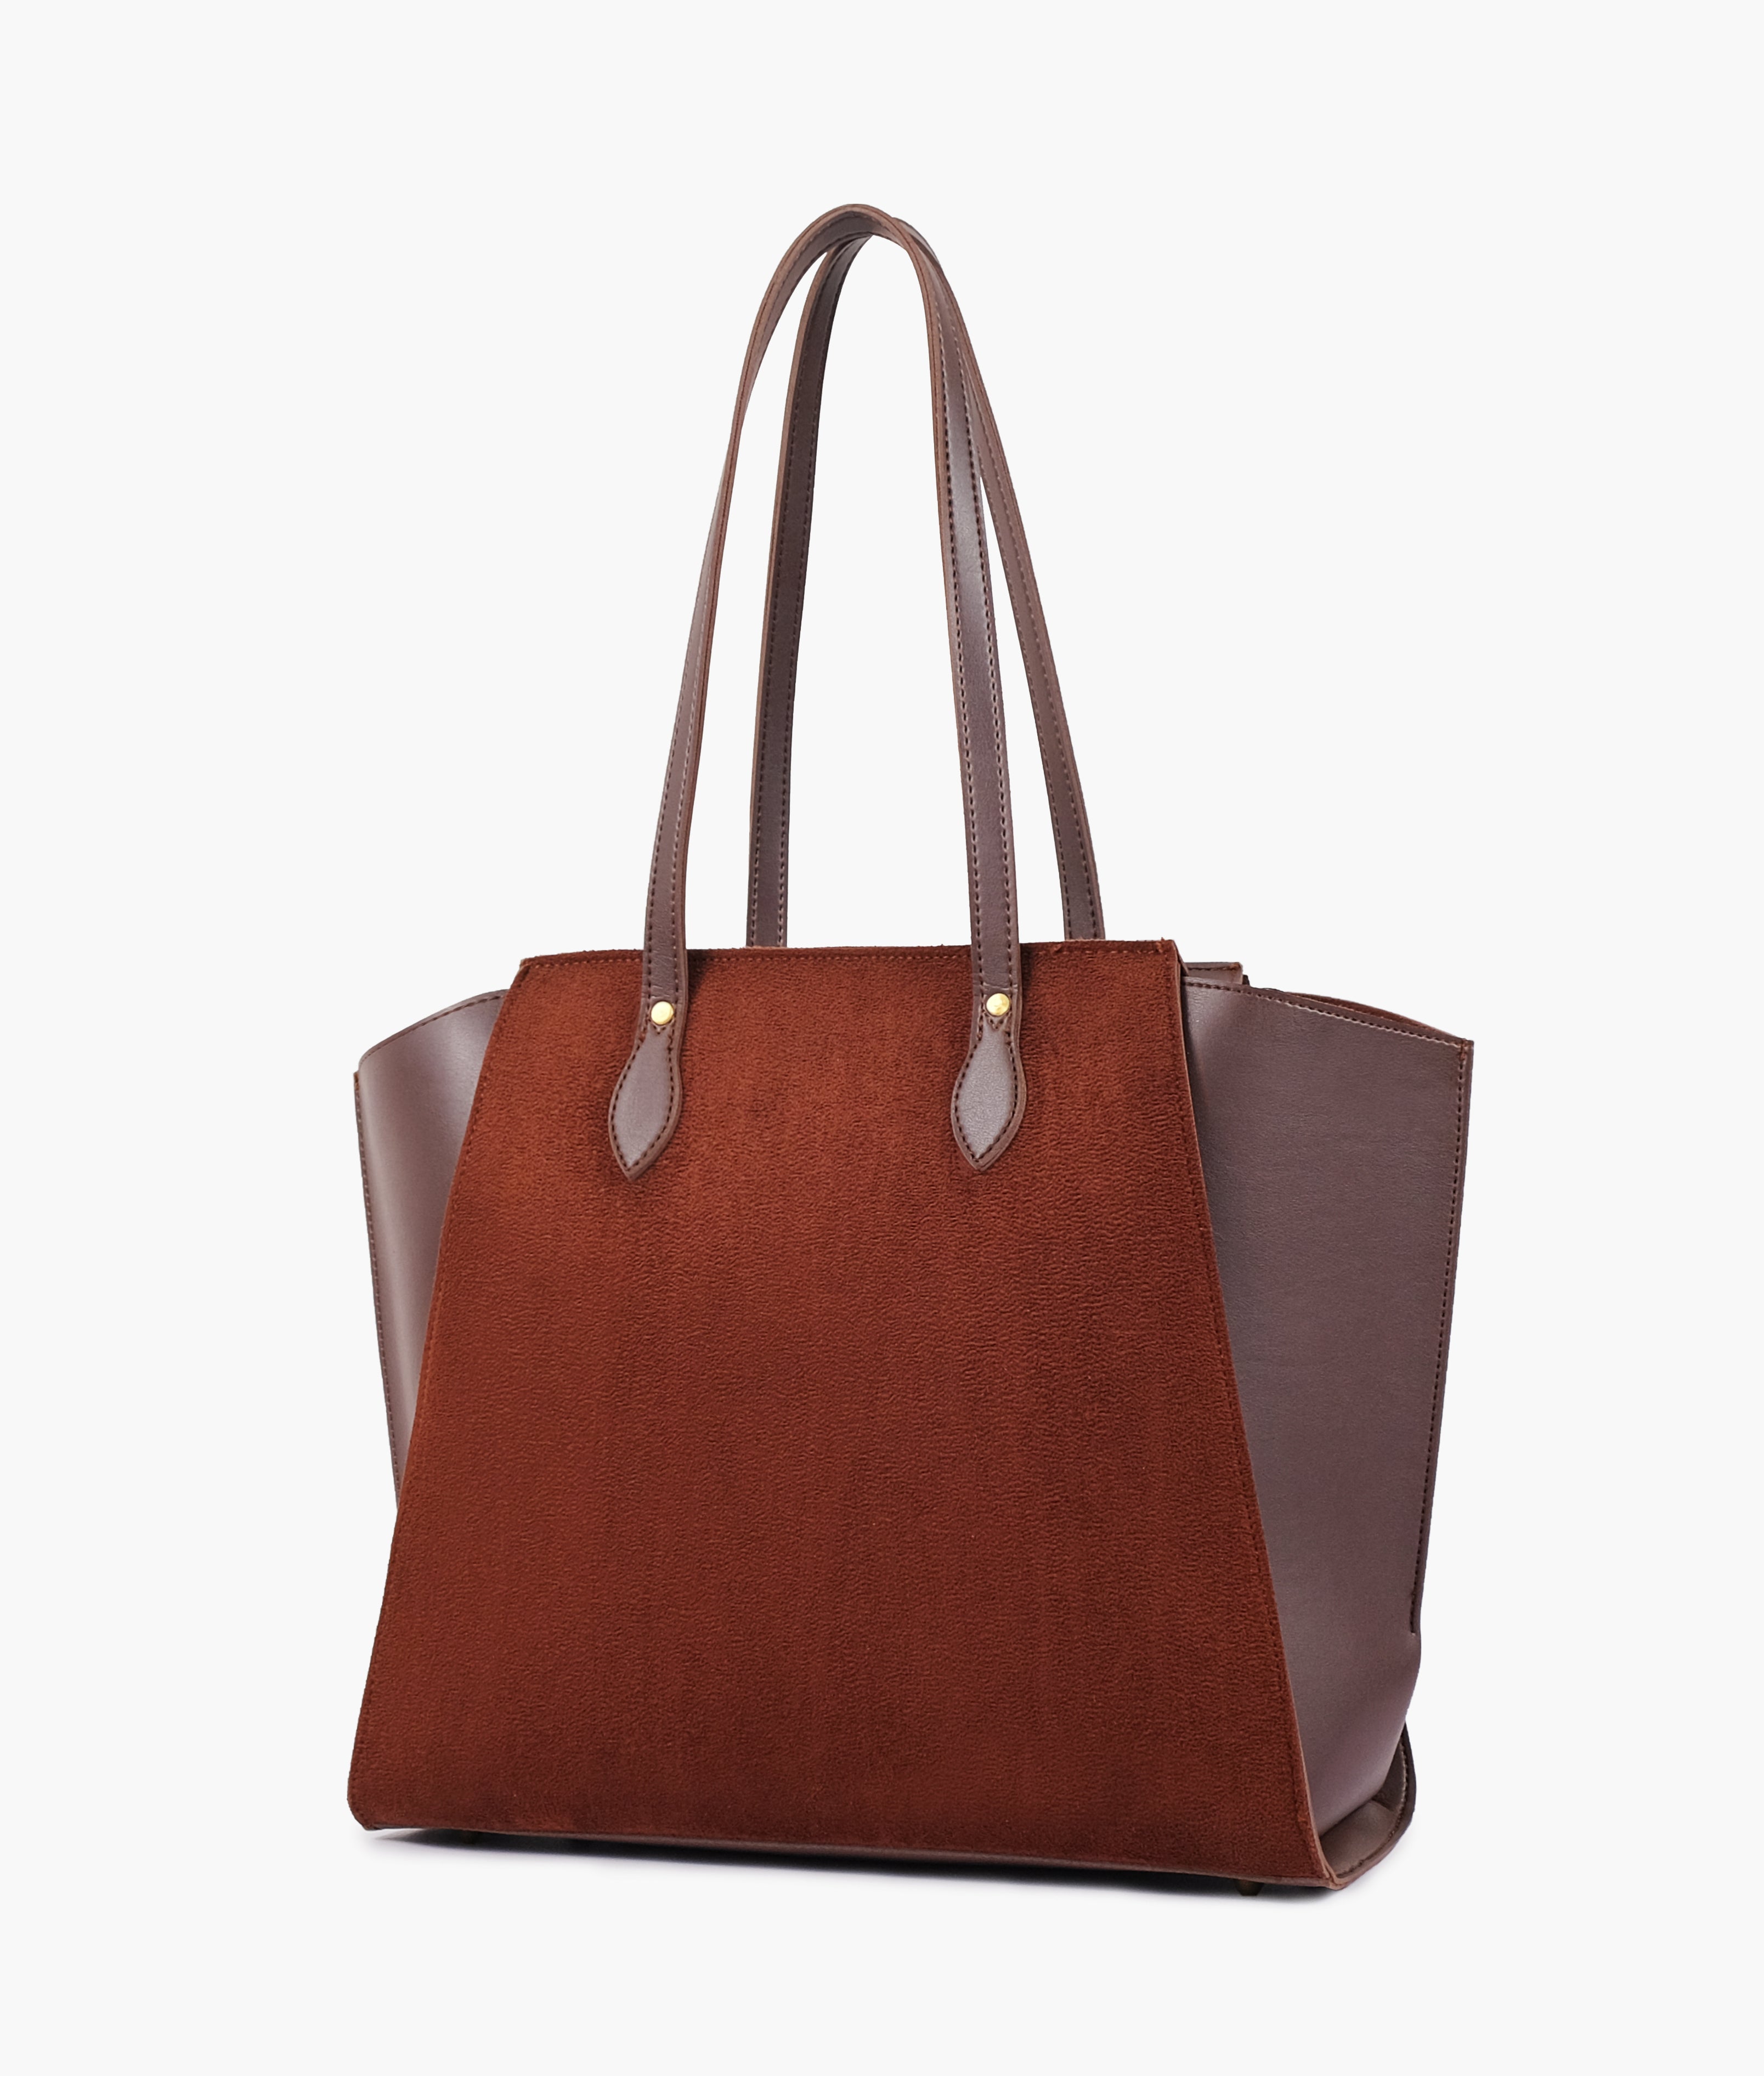 Dark brown suede classic tote bag